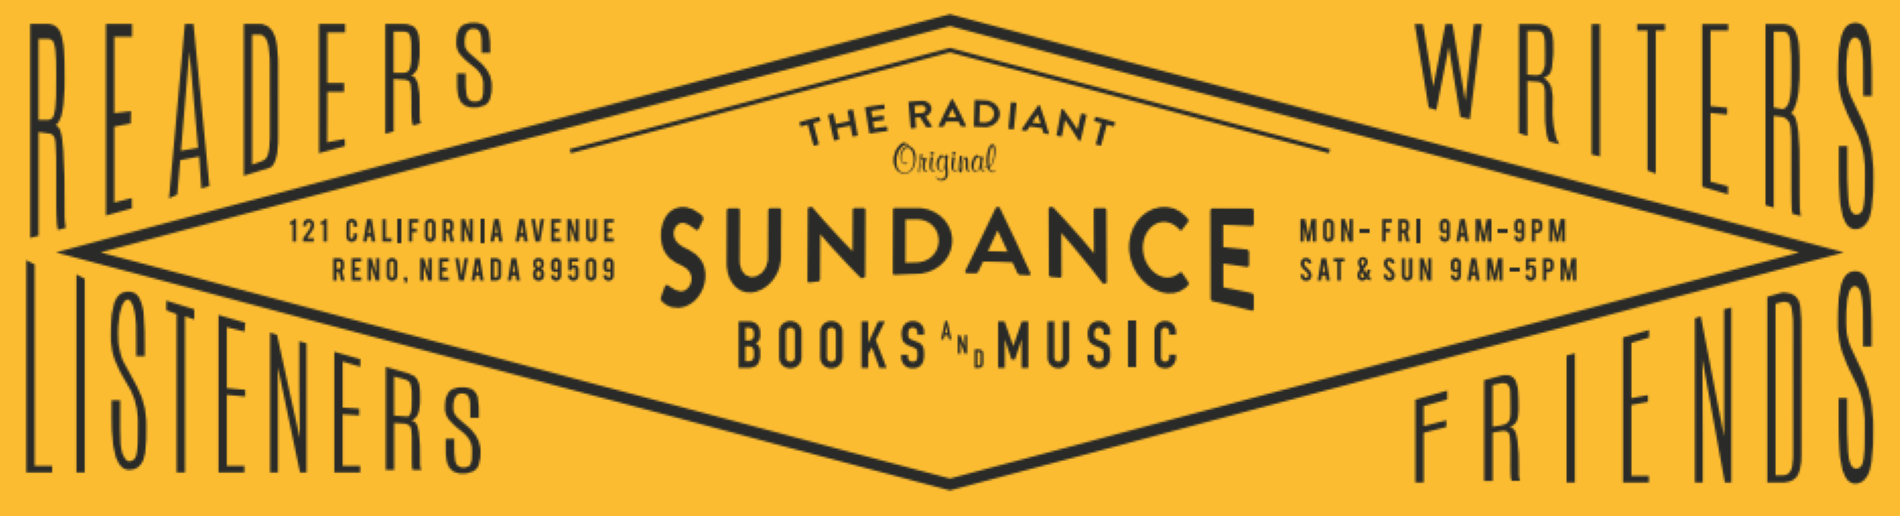 Sundance Books and Music website